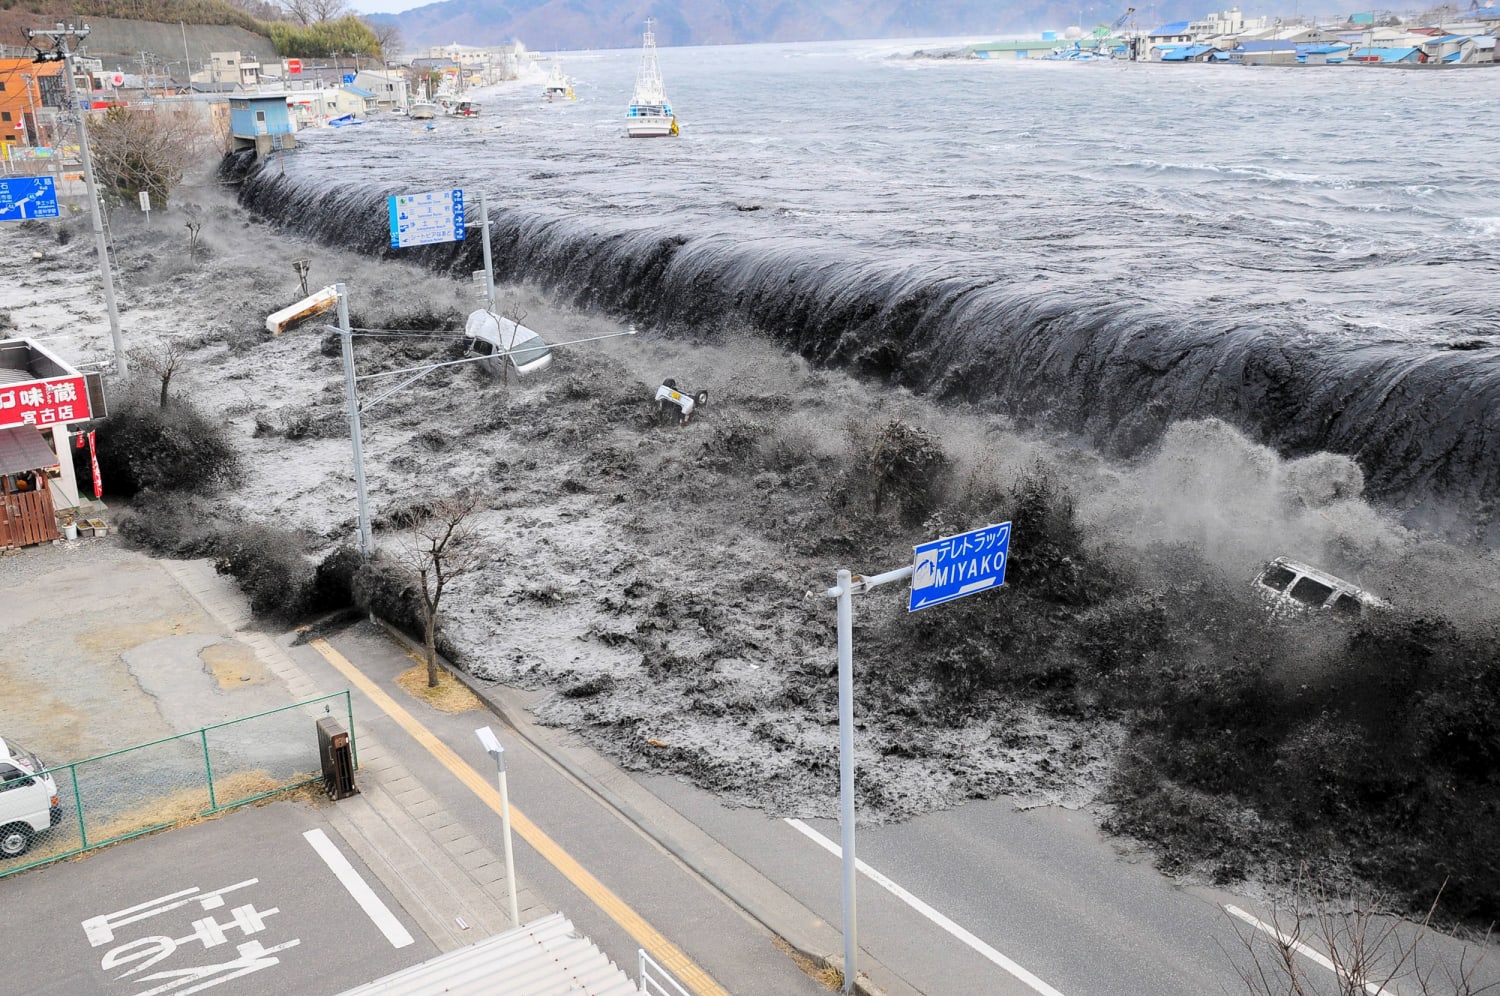 Tsunami wave sweeping through a town